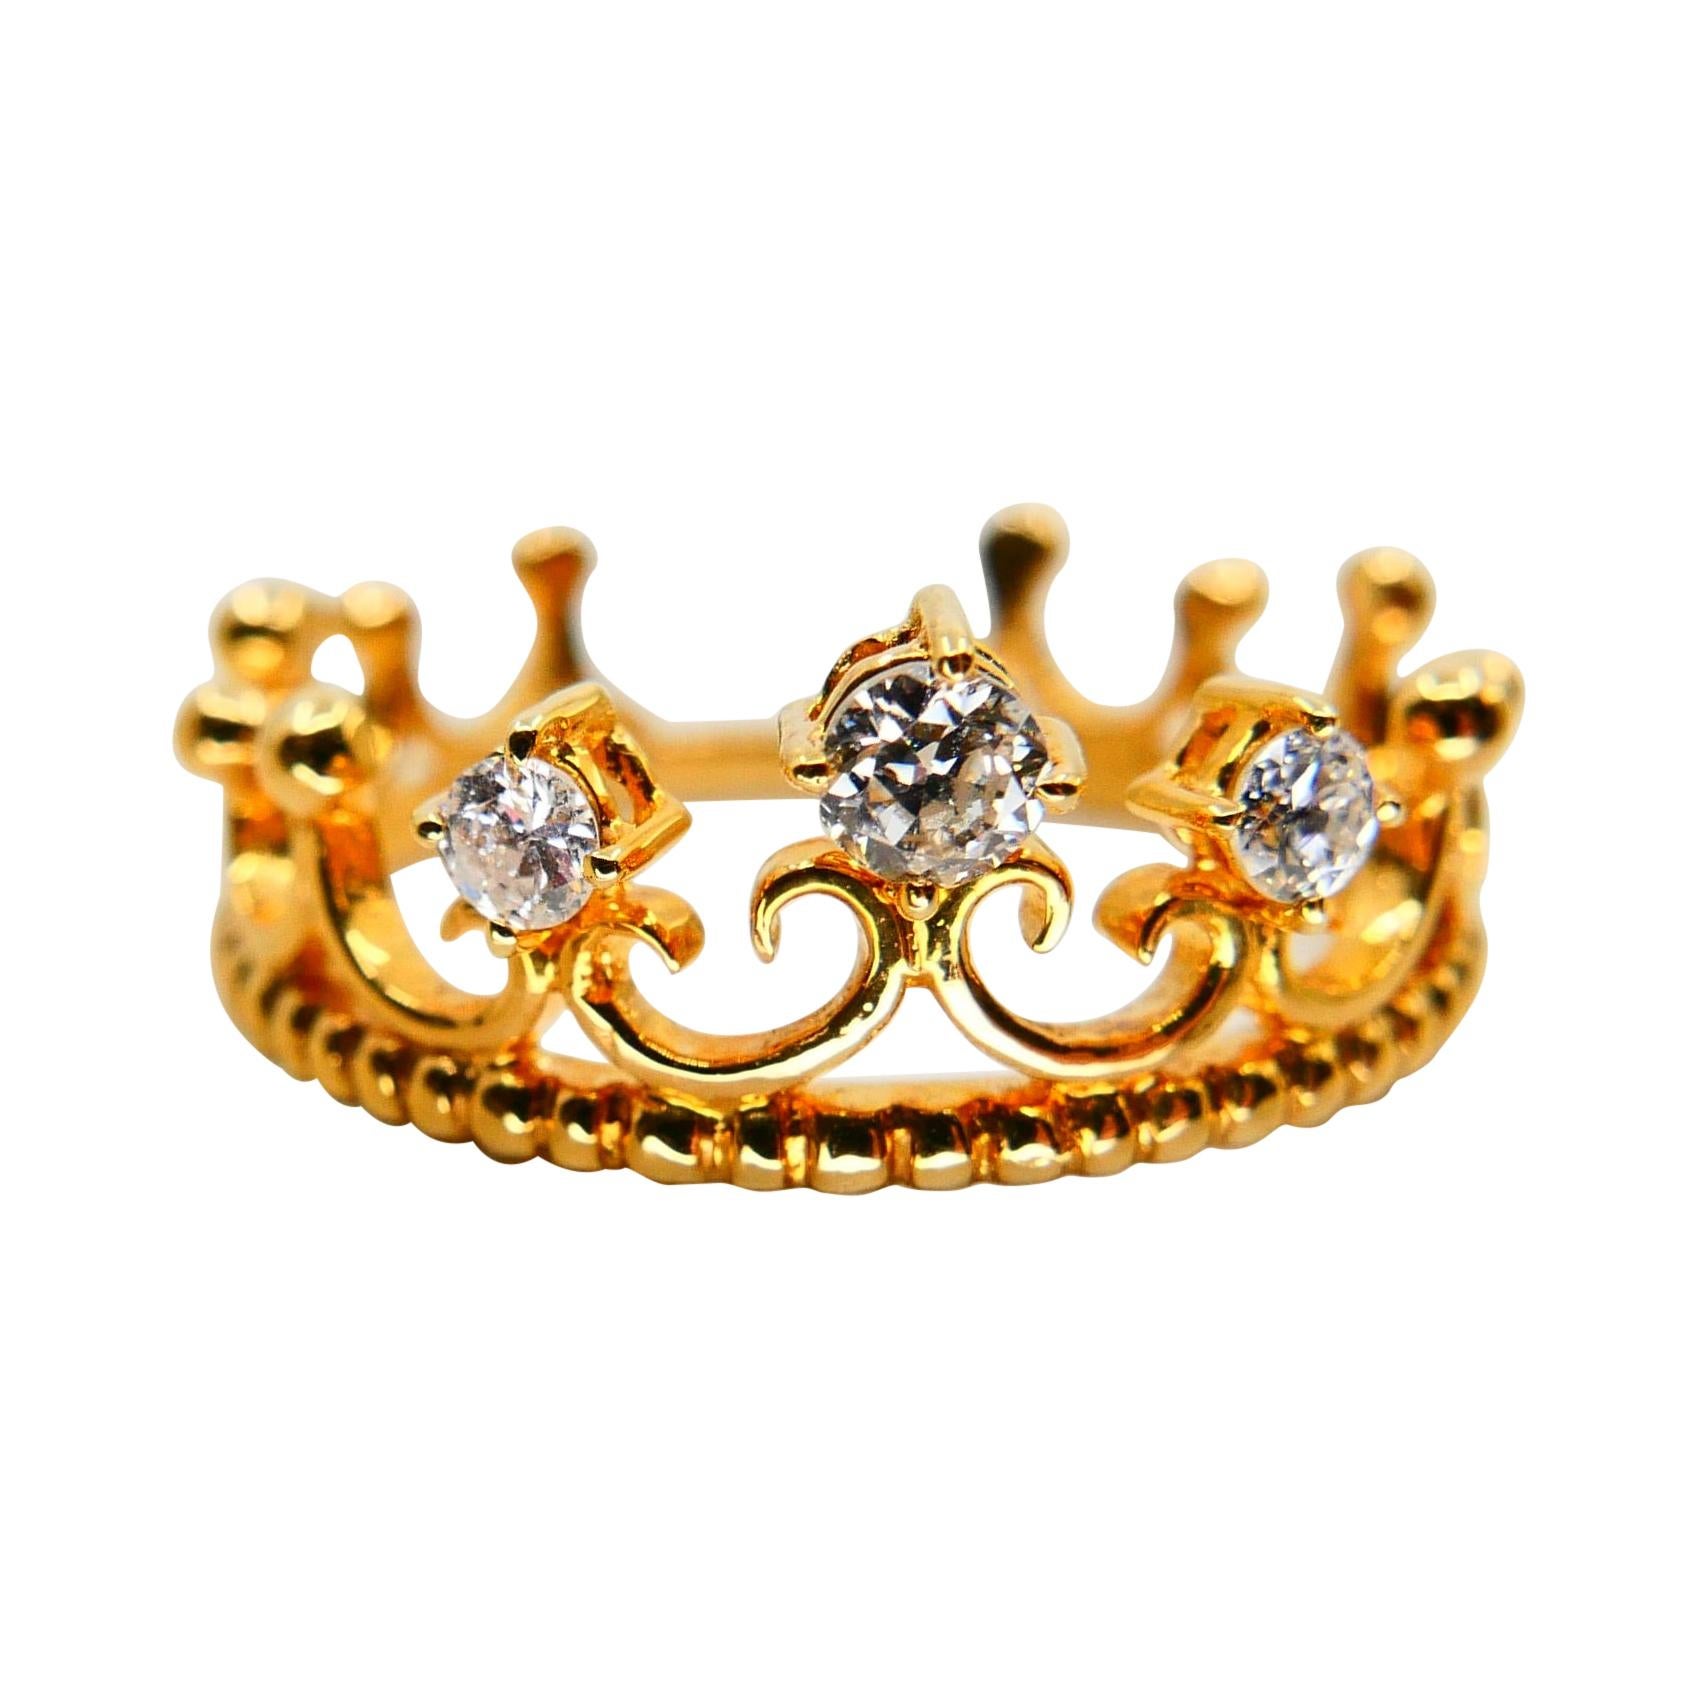 18 Karat Gold Three-Stone Crown Ring with Old Mine Cut Diamonds. 0.22 Carat